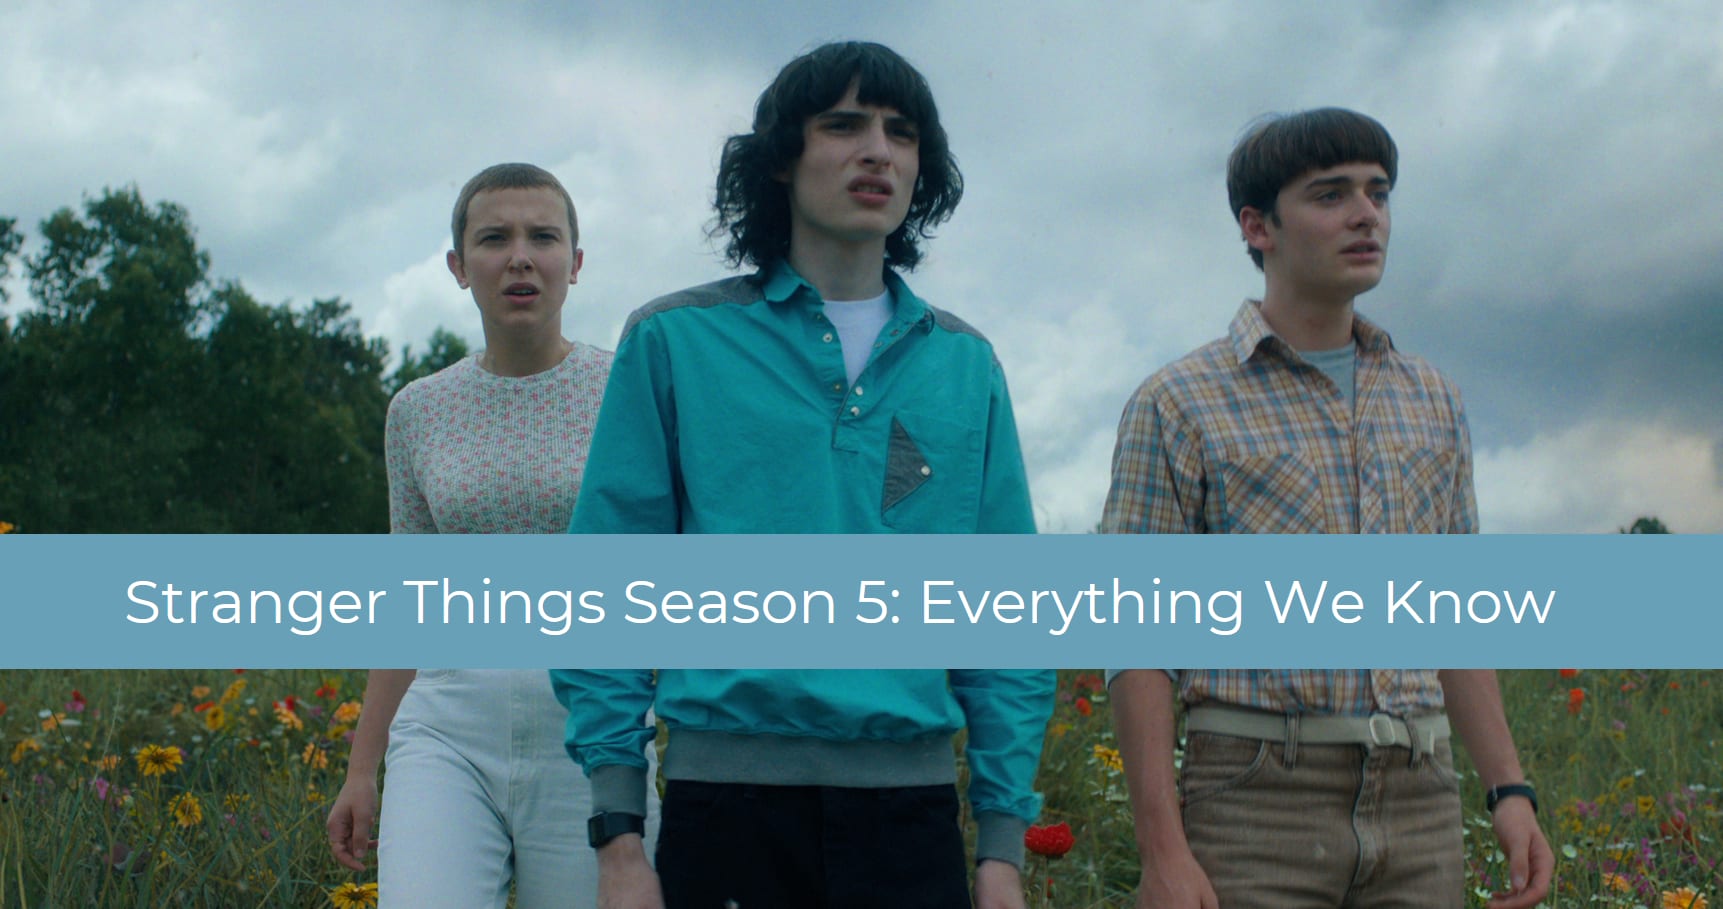 Stranger Things' Season 5 News: Everything We Know So Far